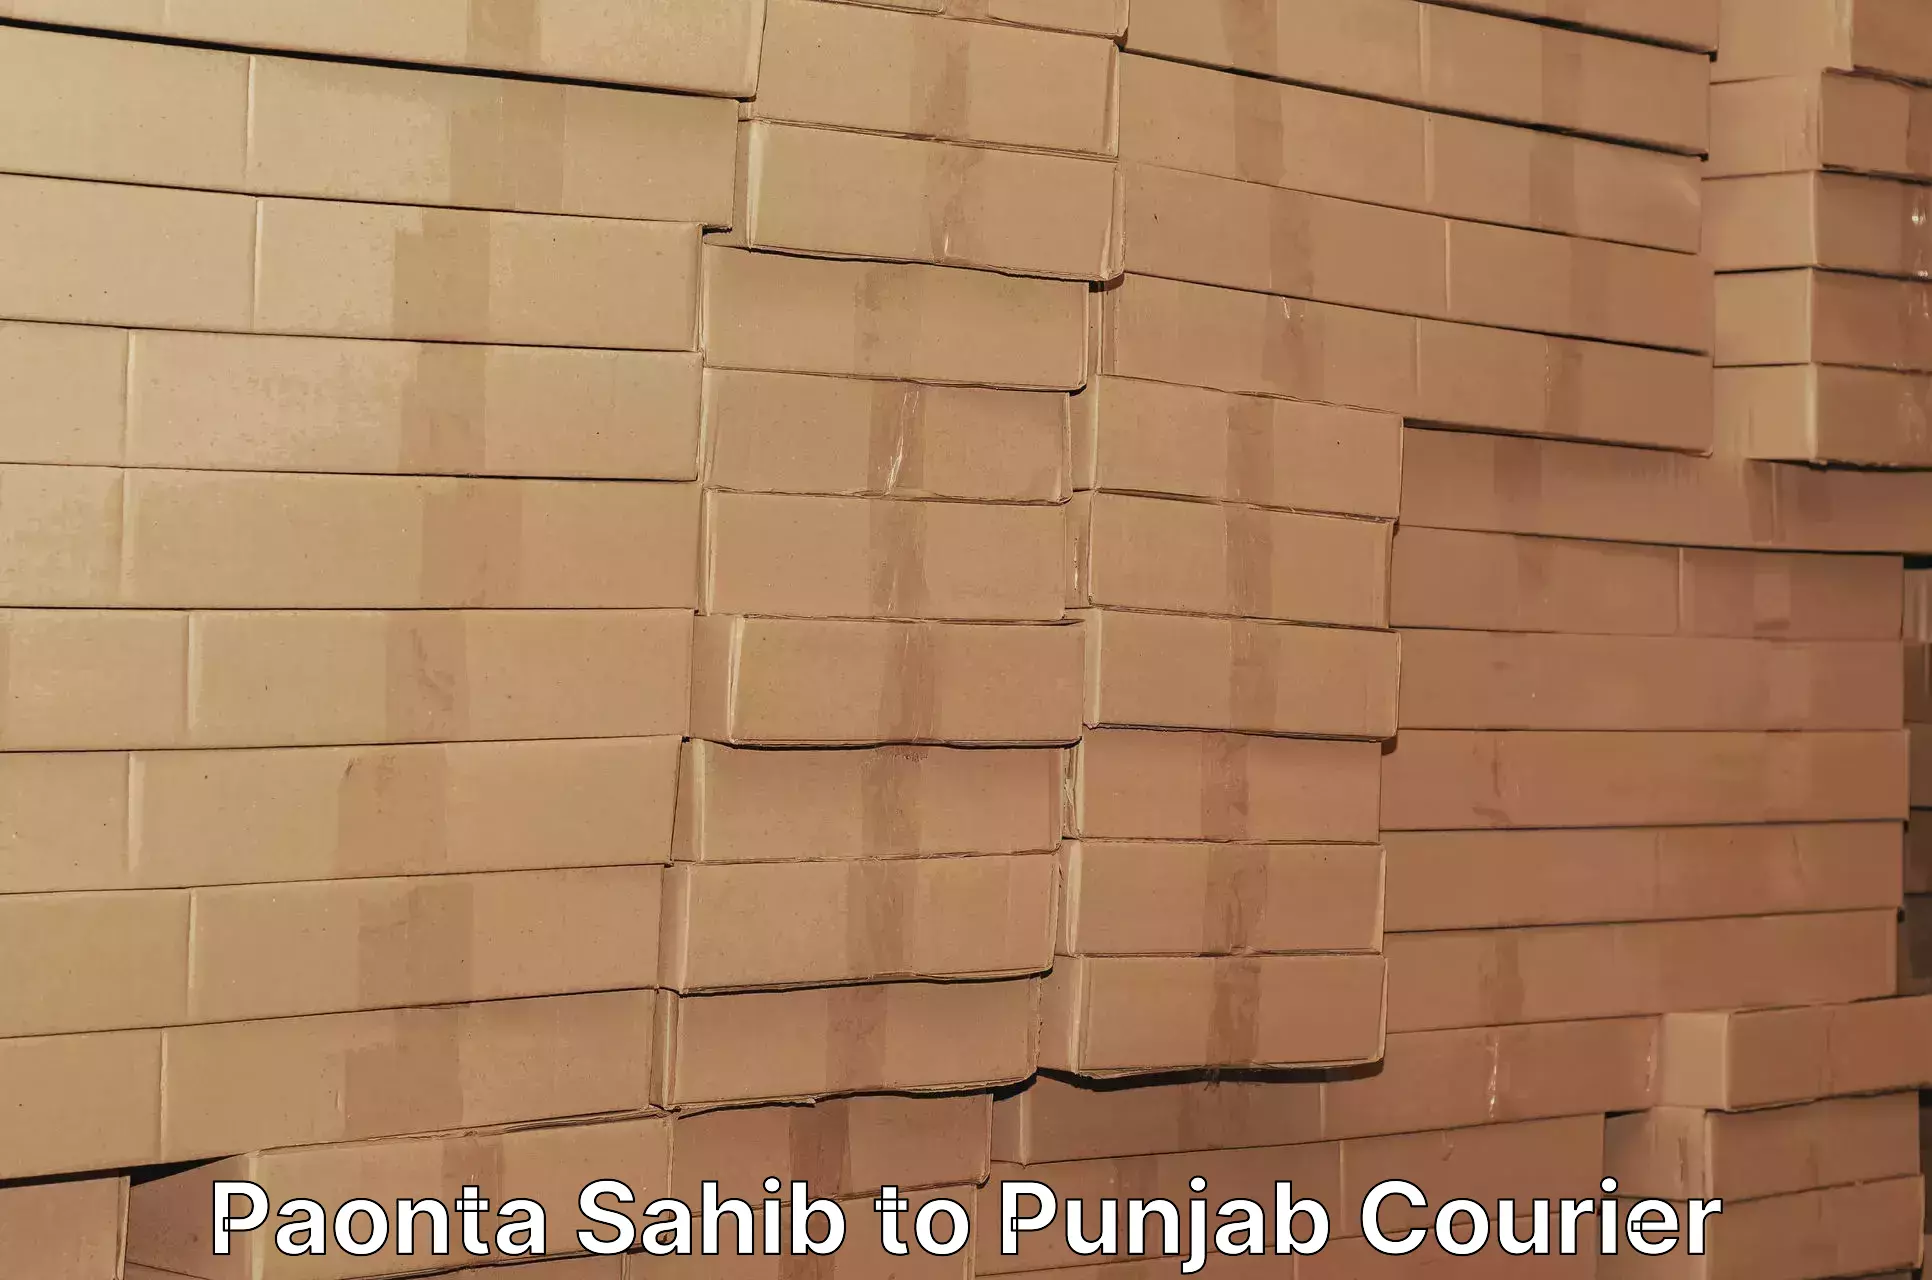 Urgent courier needs Paonta Sahib to Punjab